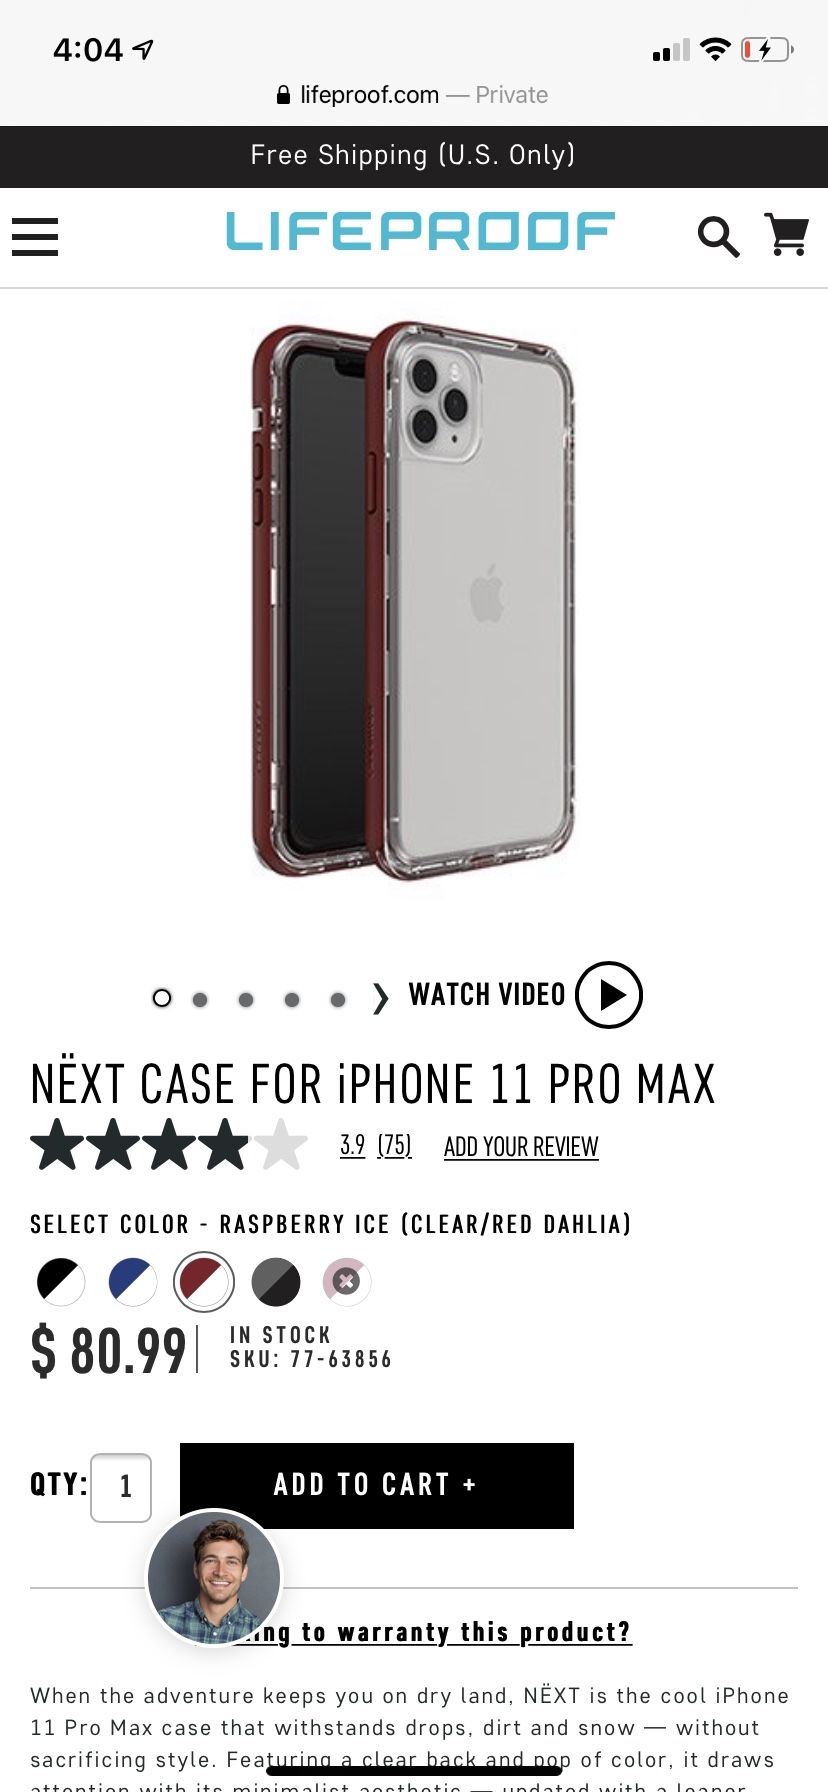 NËXT CASE FOR iPHONE 11 PRO MAX